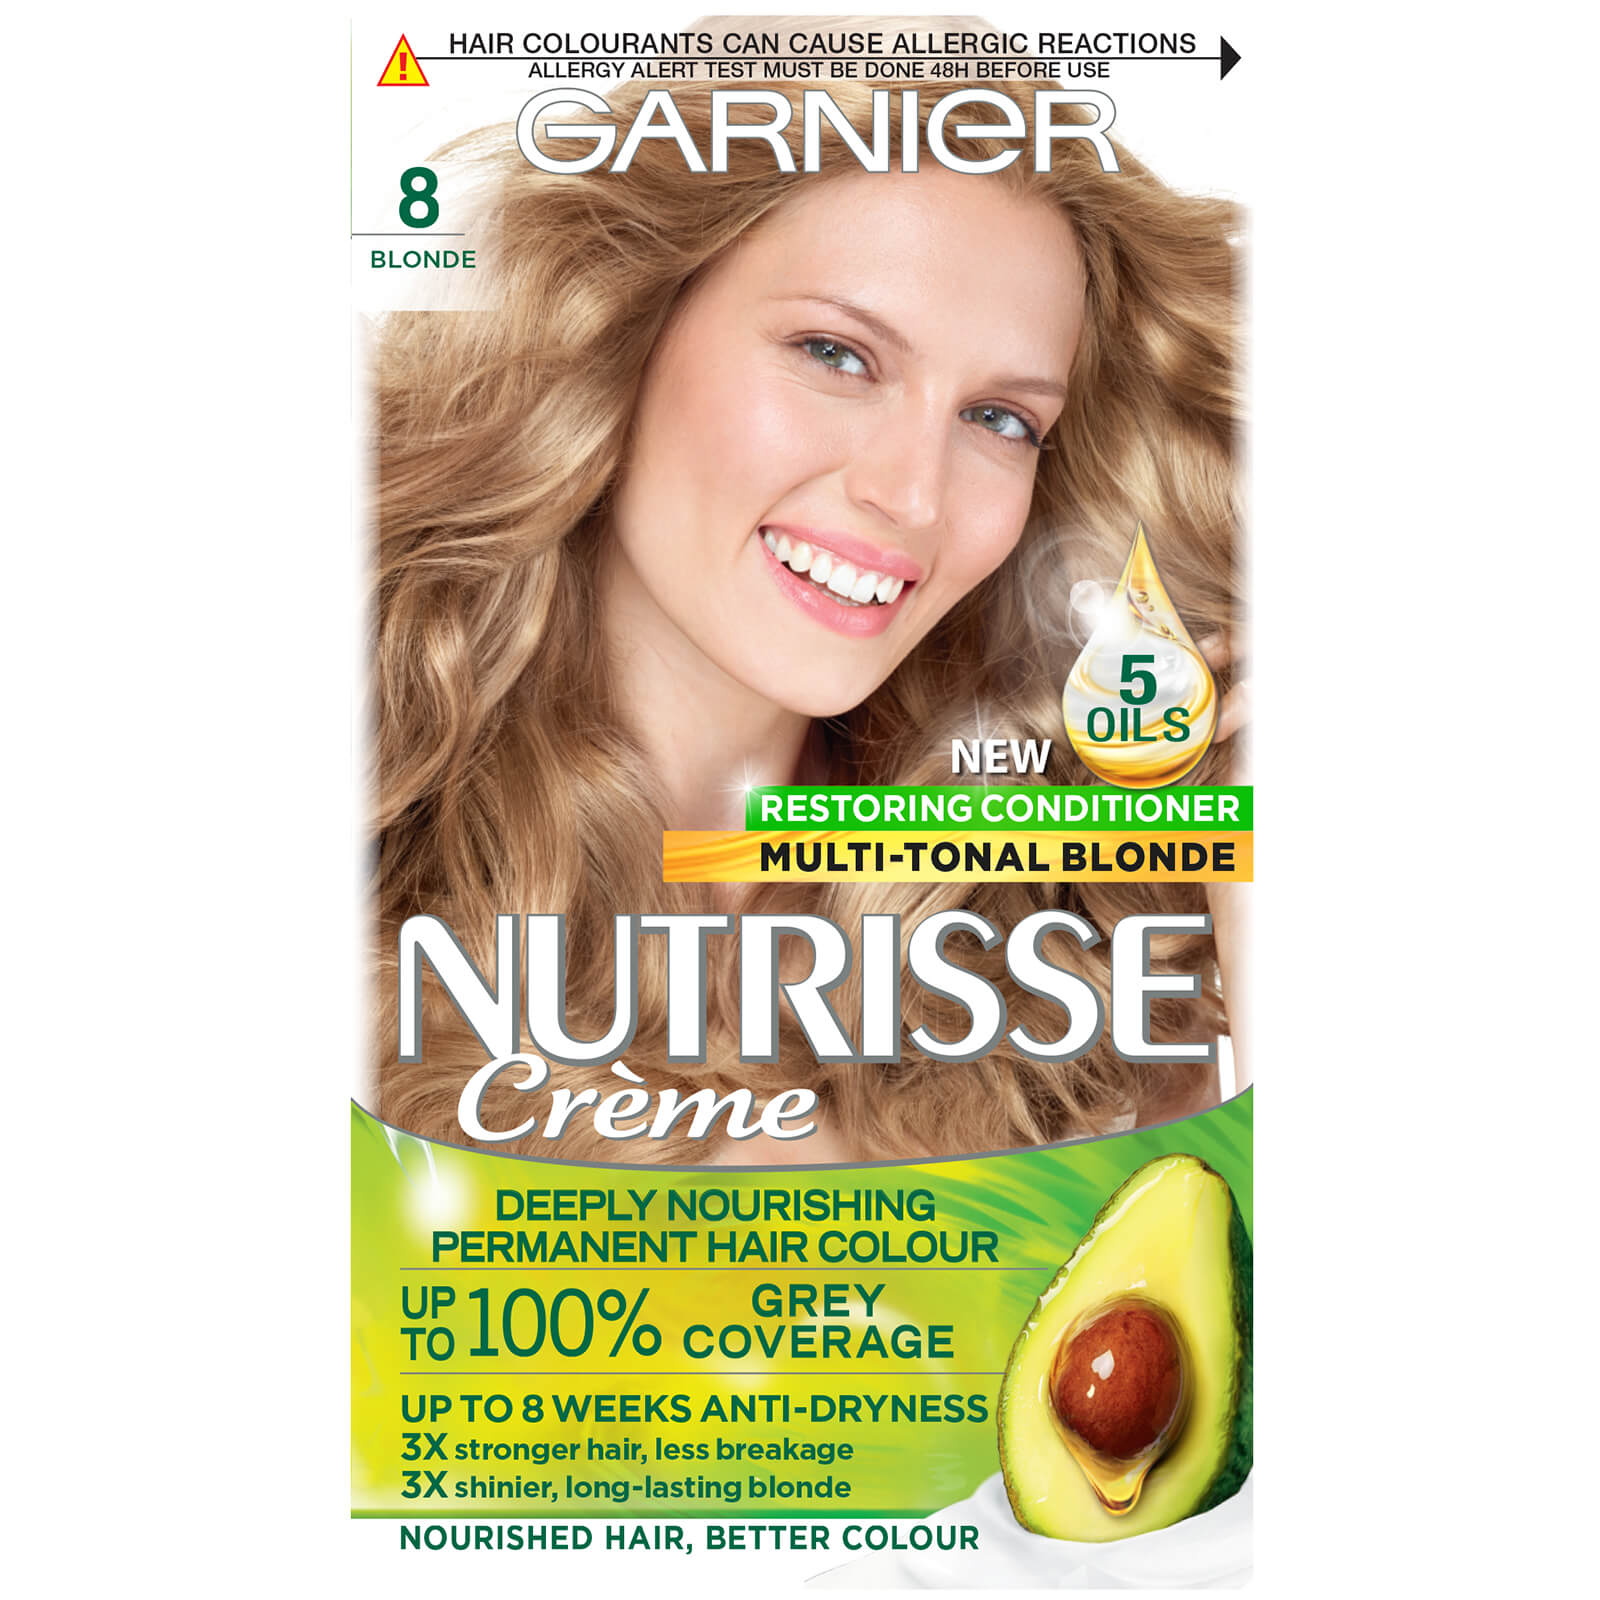 Garnier Nutrisse Creme Permanent Nourishing Hair Colour Vanilla Blonde 8 Blonde